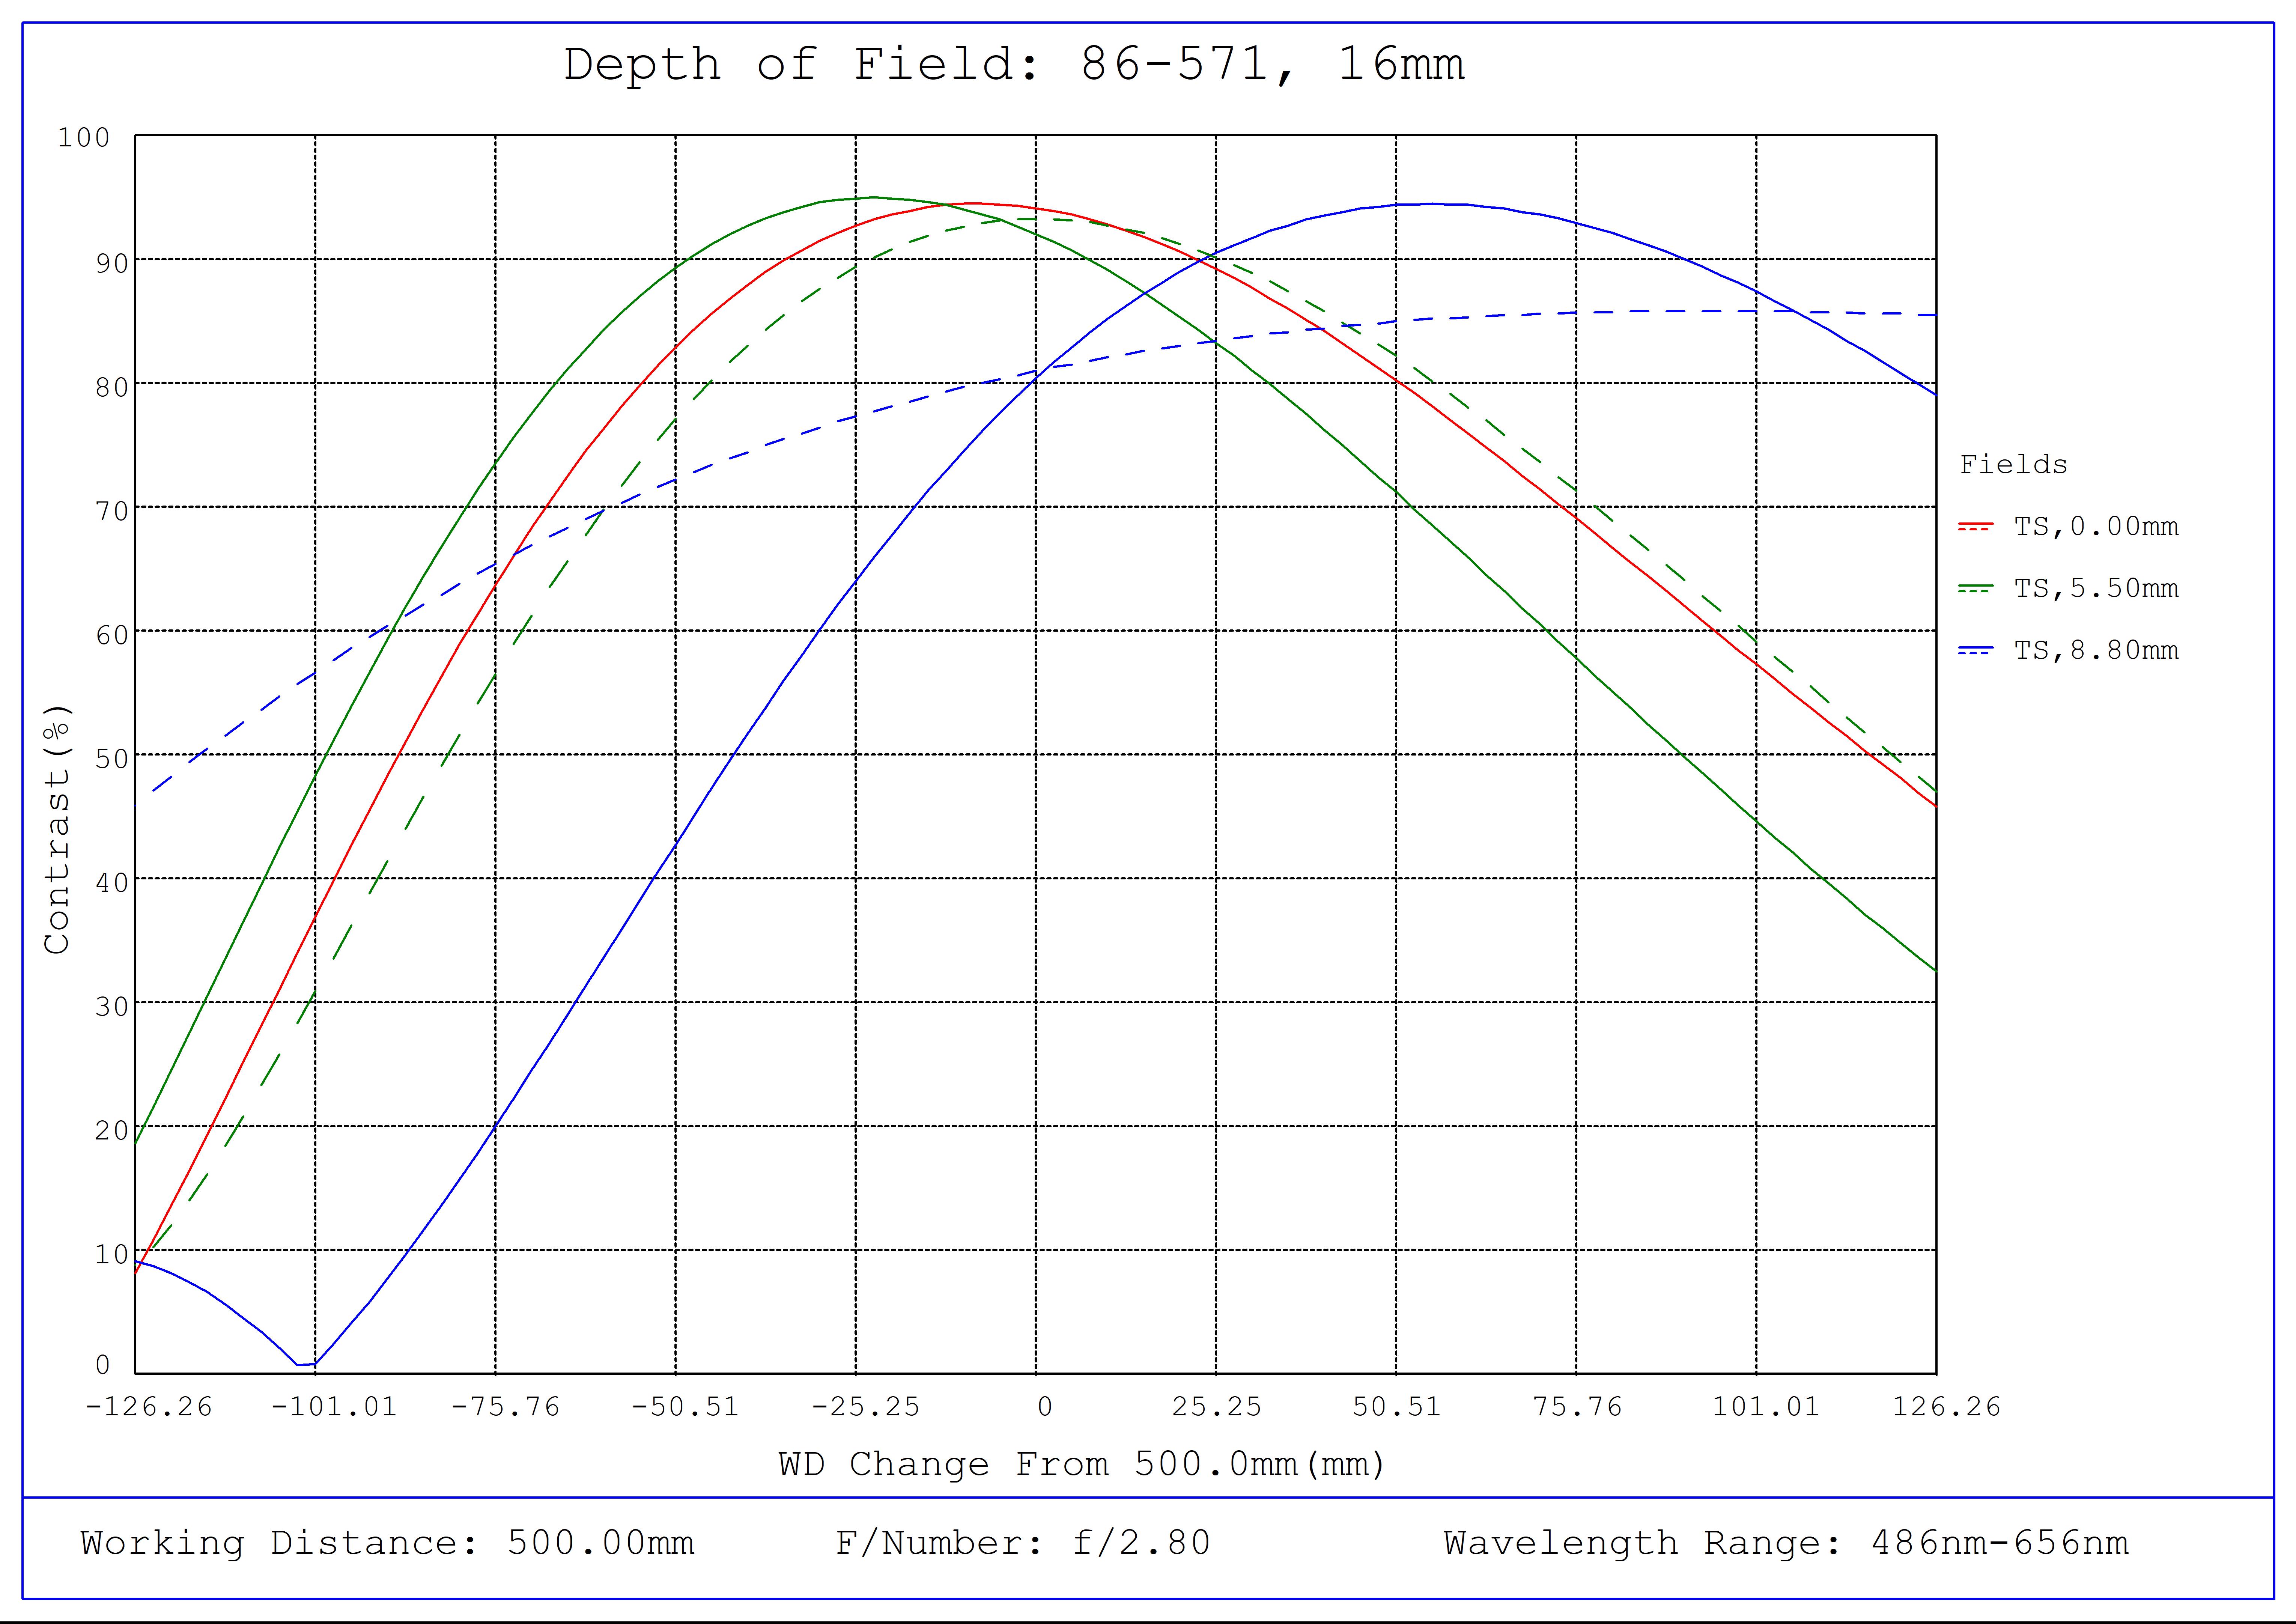 #86-571, 16mm Focal Length, HP Series Fixed Focal Length Lens, Depth of Field Plot, 500mm Working Distance, f2.8